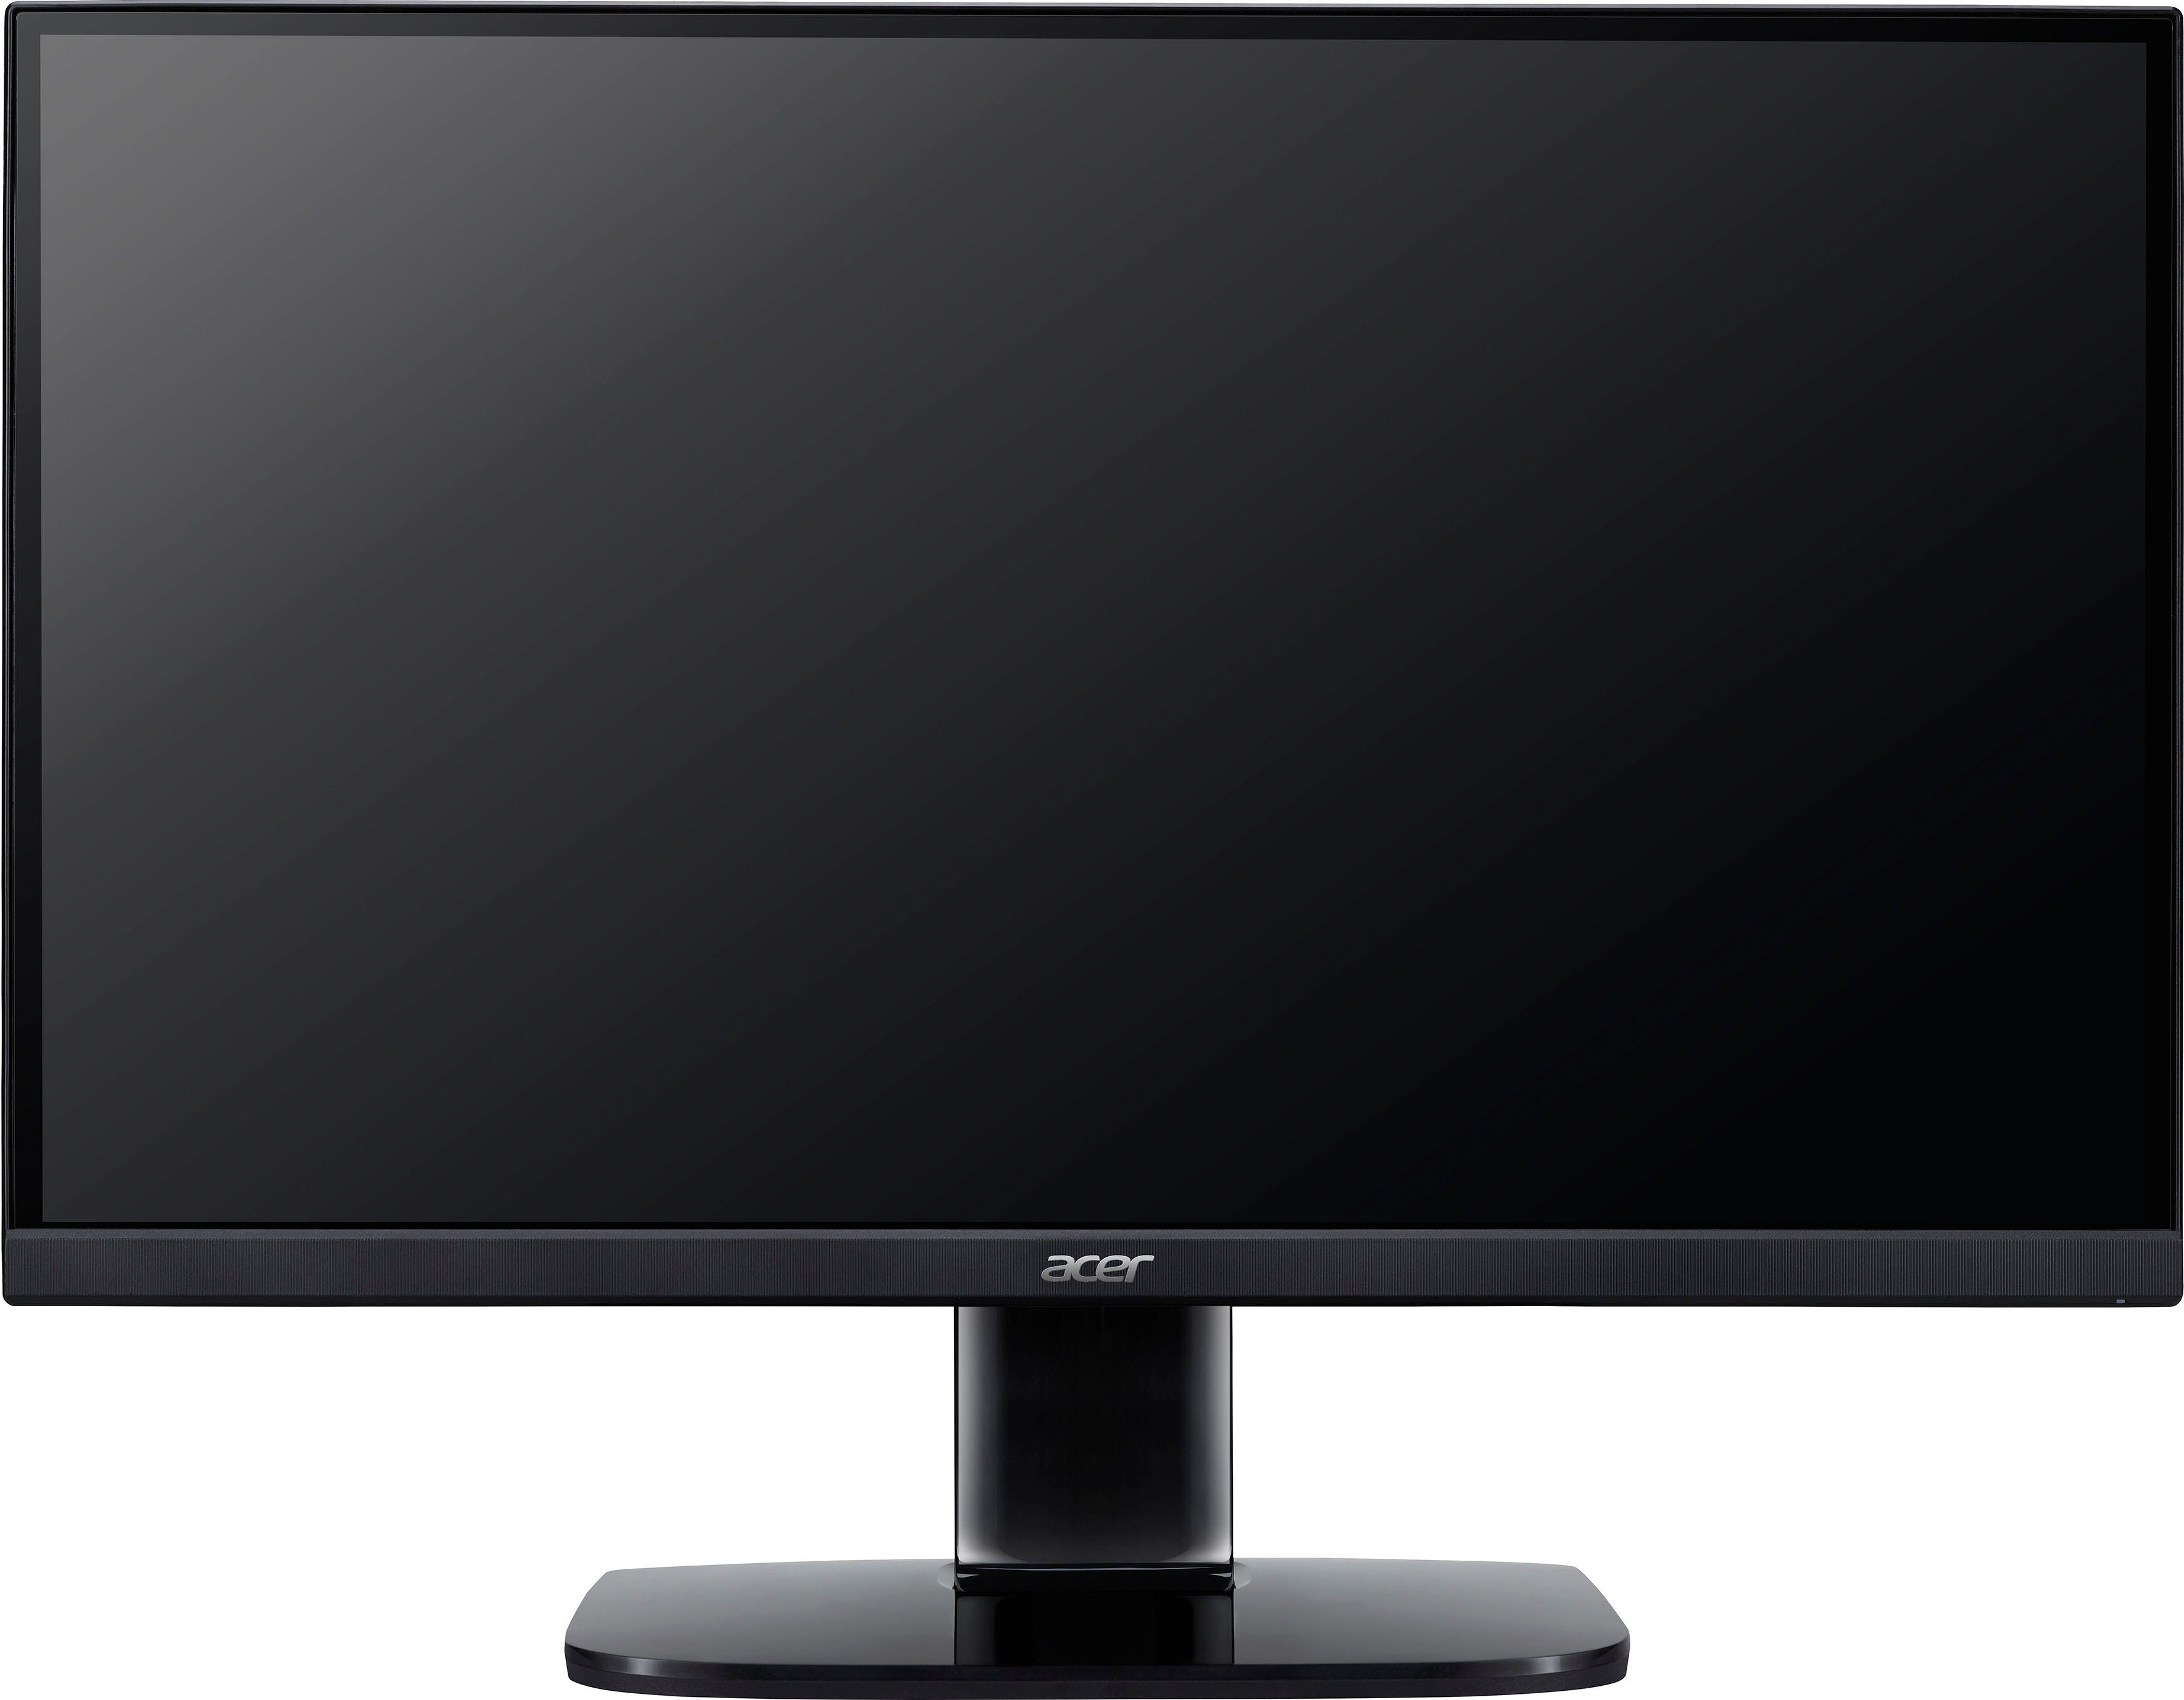 Acer Ledscherm KA270H, | / snel OTTO HD Full cm 69 27 gekocht online 